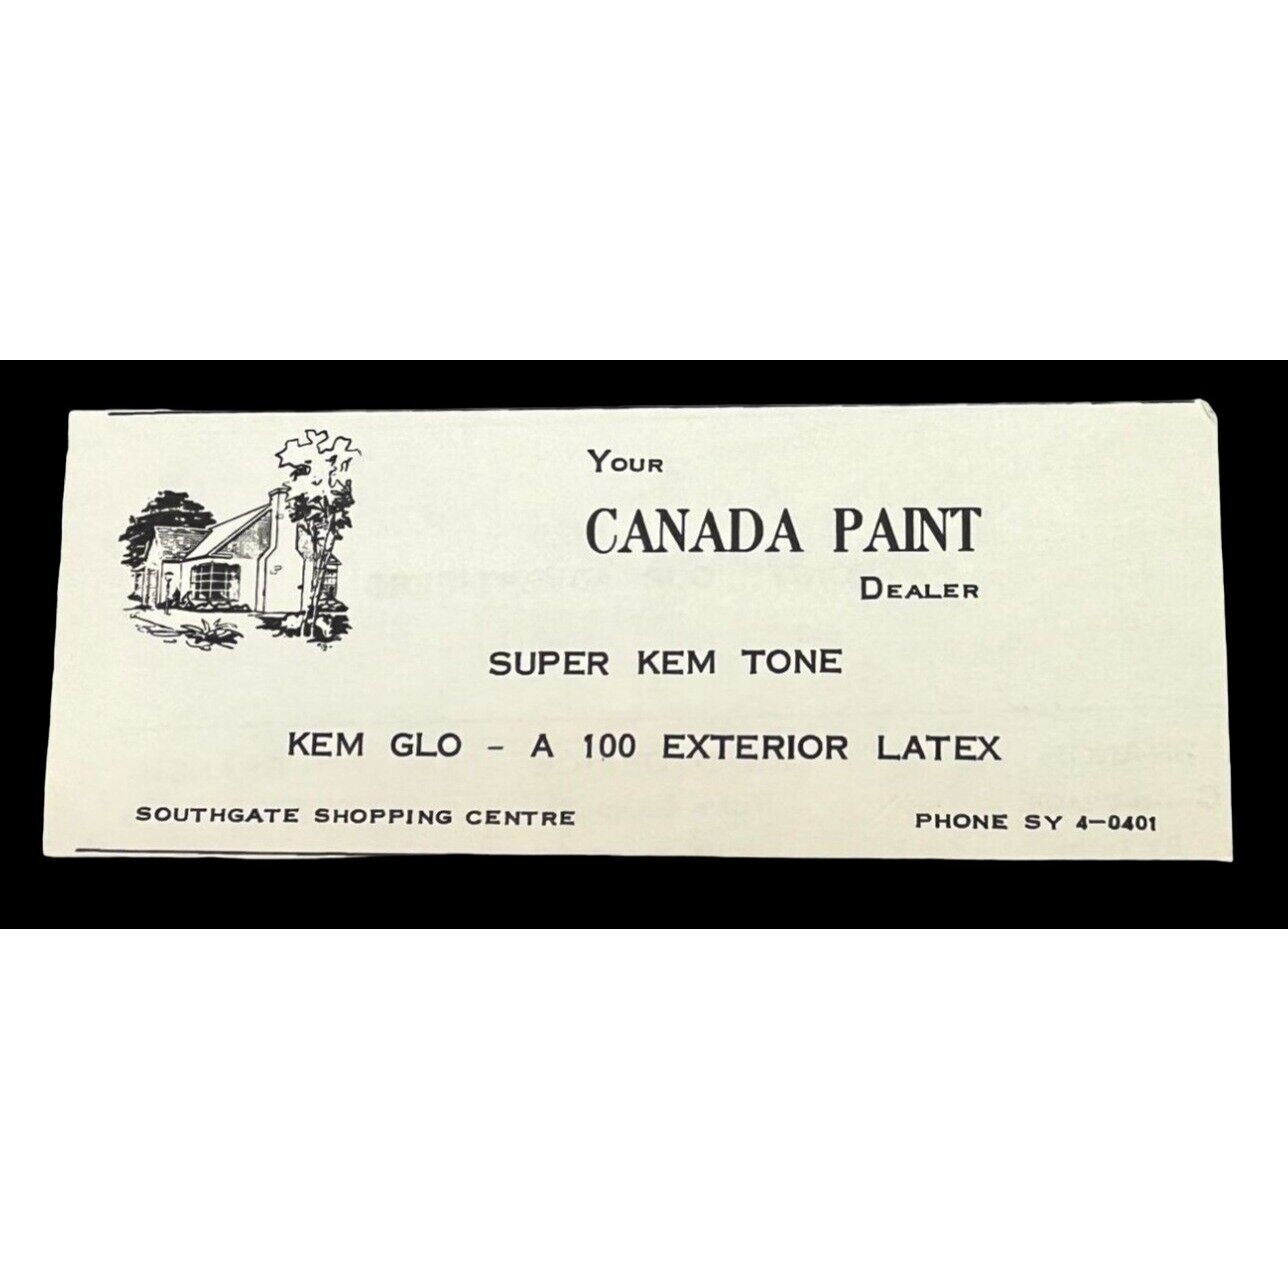 Canada Paint Dealer Vintage Print Ad Chilliwack B.C. Super Kem Tone 1950s